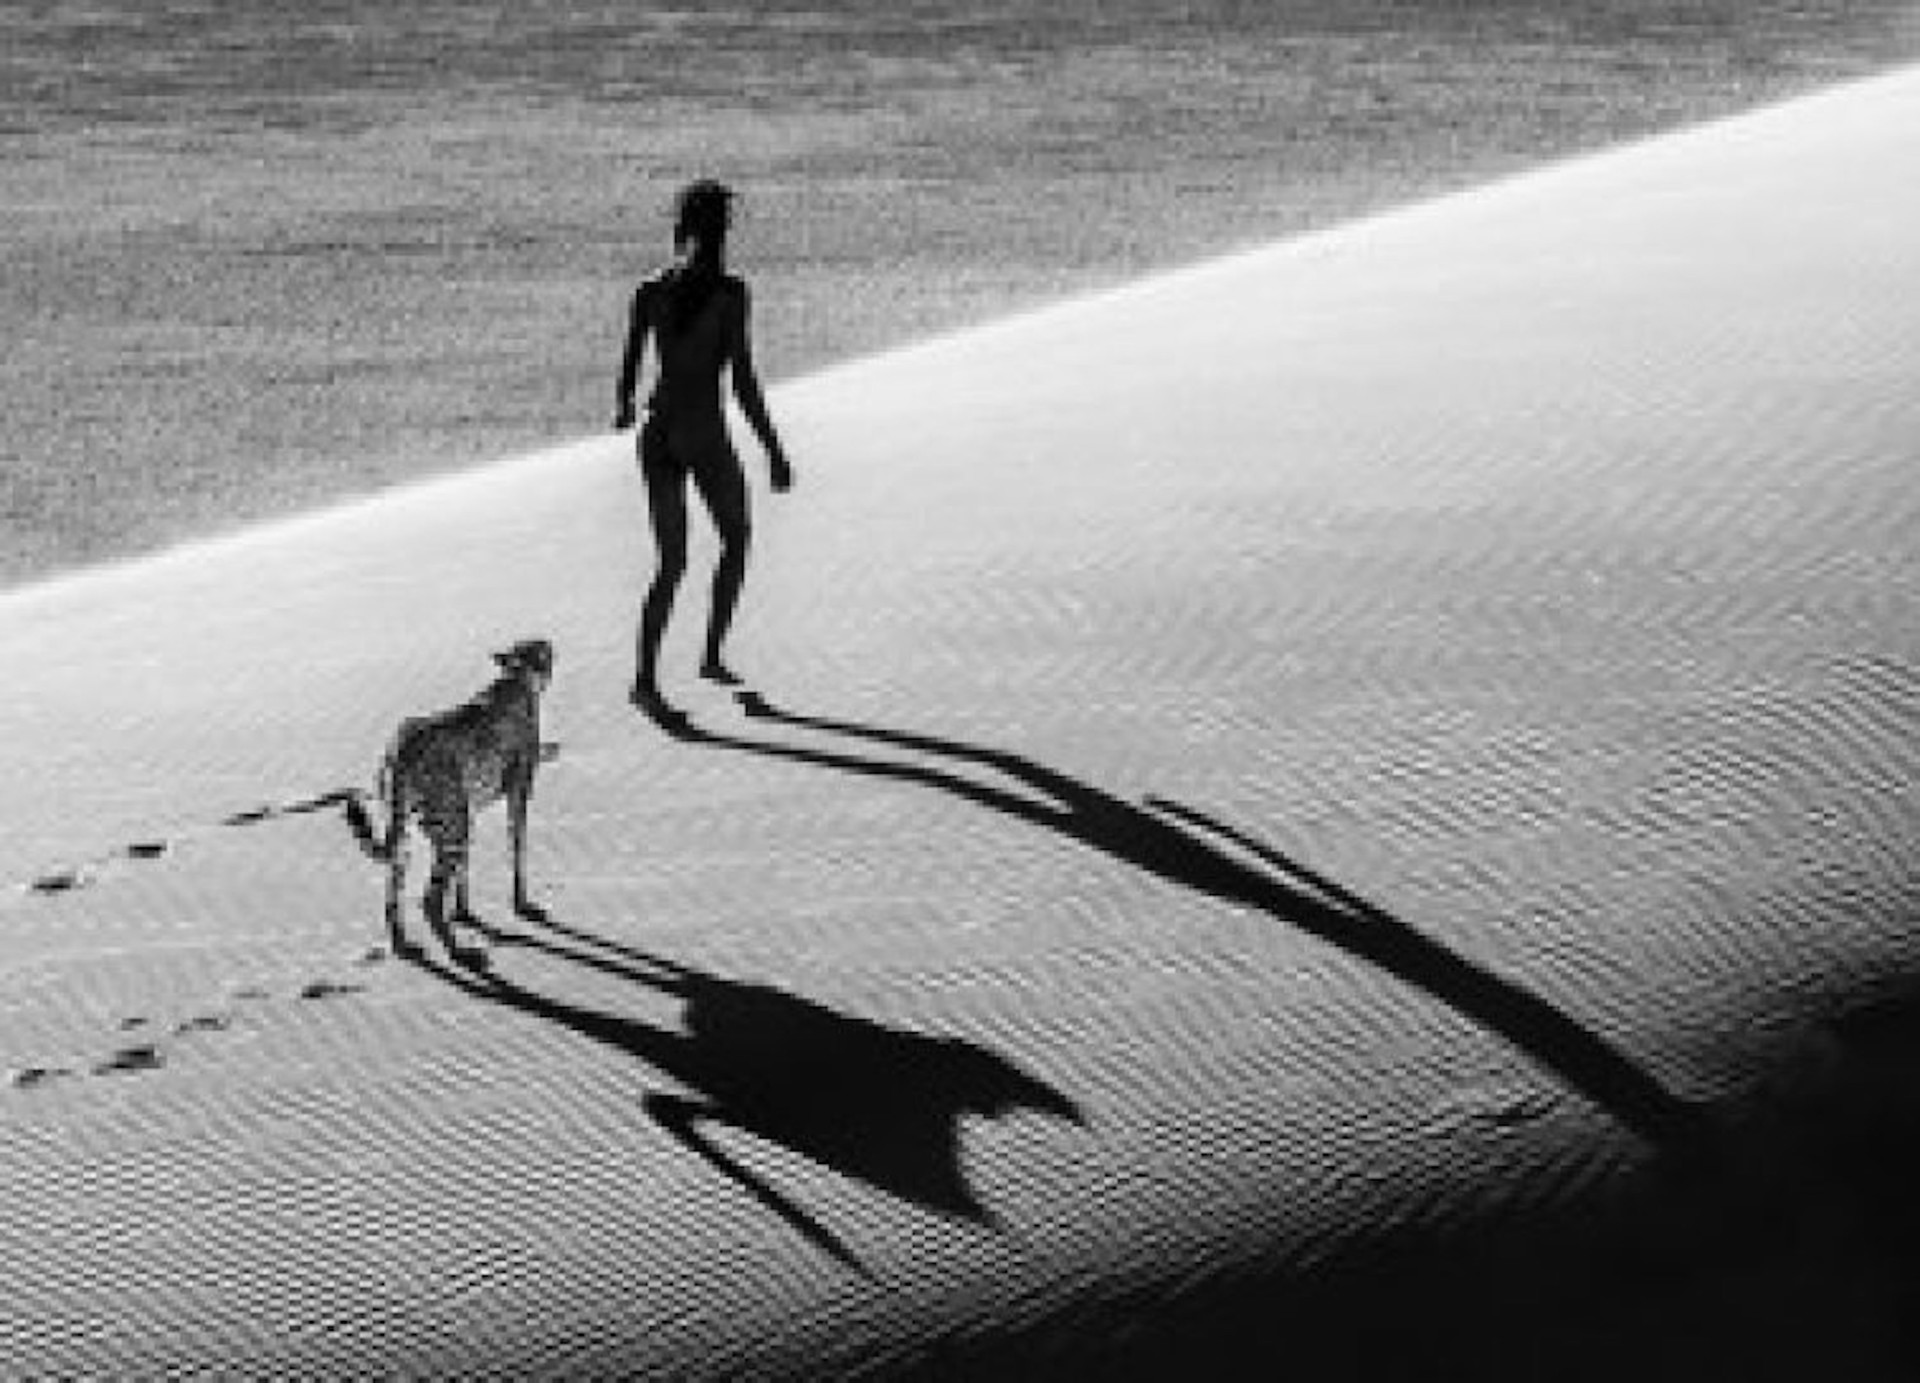 On The Catwalk by David Yarrow